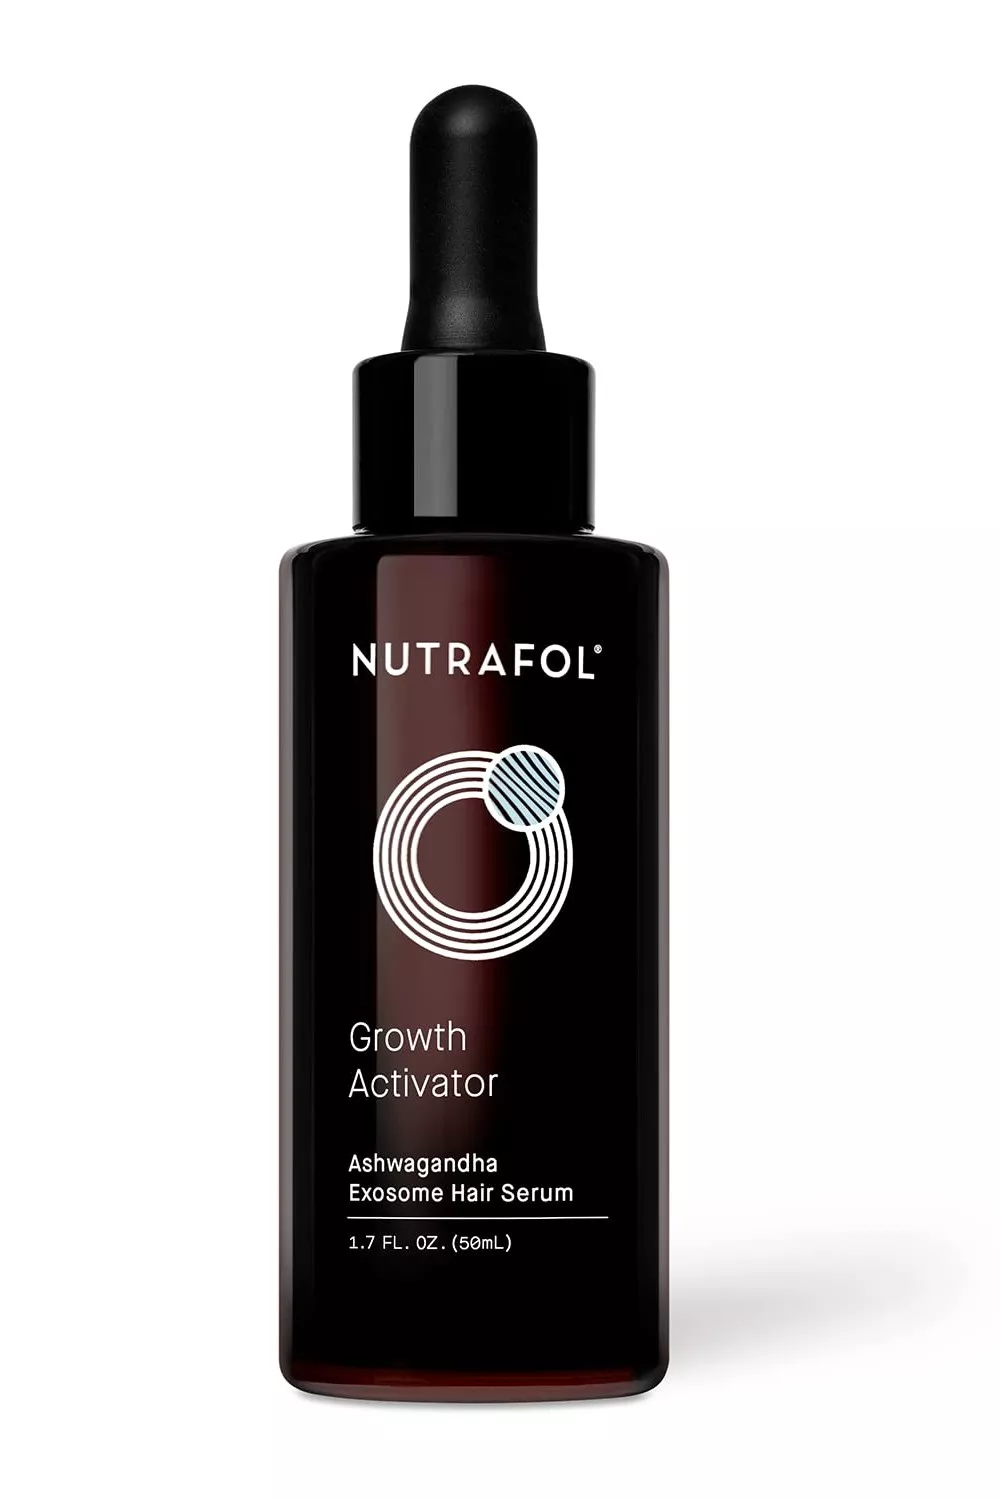 Hair активатор. Activator для волос. Sid Systems для волос сыворотка. Nutrafol. Hair Activator activating Serum.